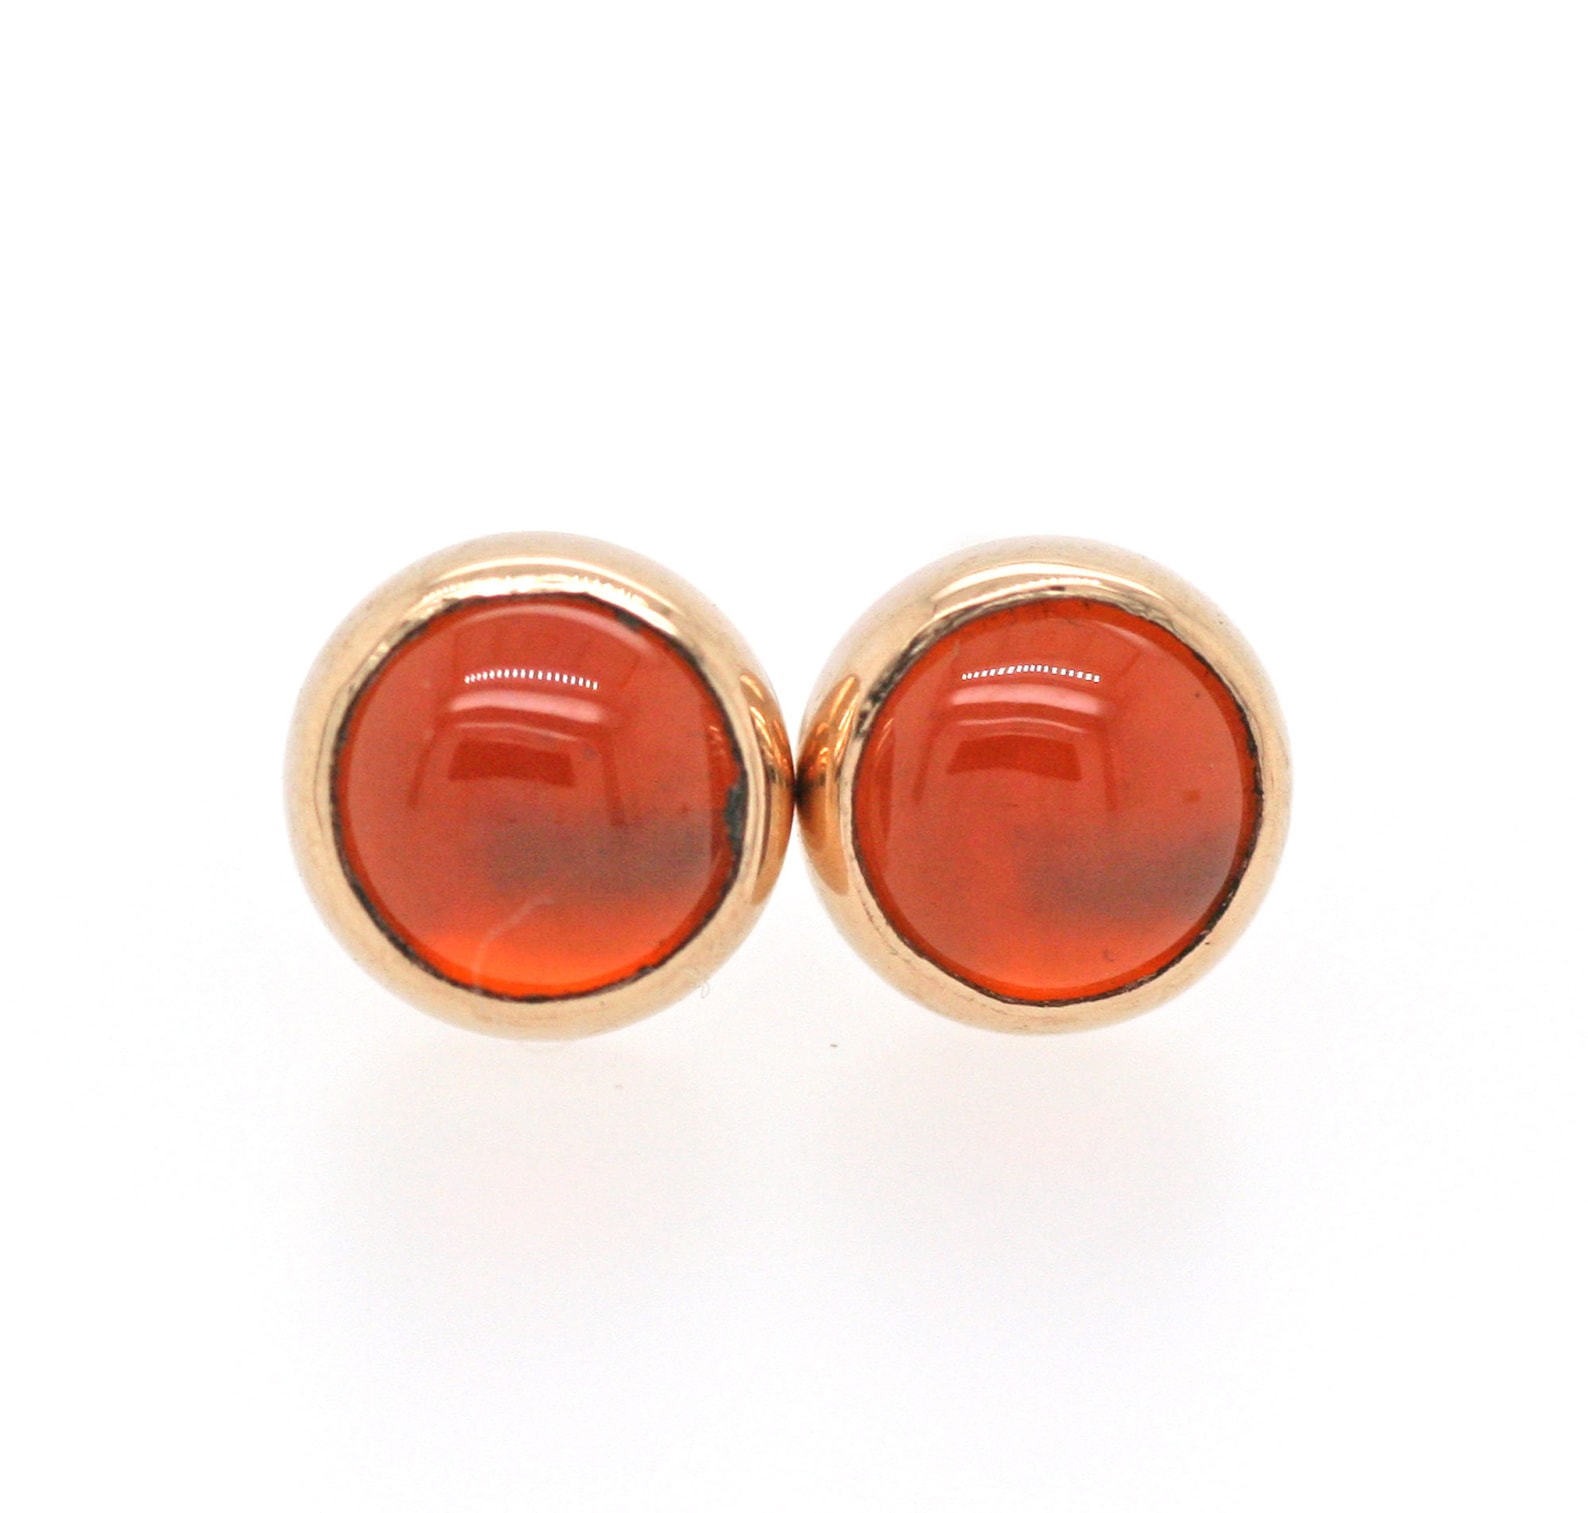 Orange Garnet Stud Earrings Solid 14k Gold Earrings Solid | Etsy